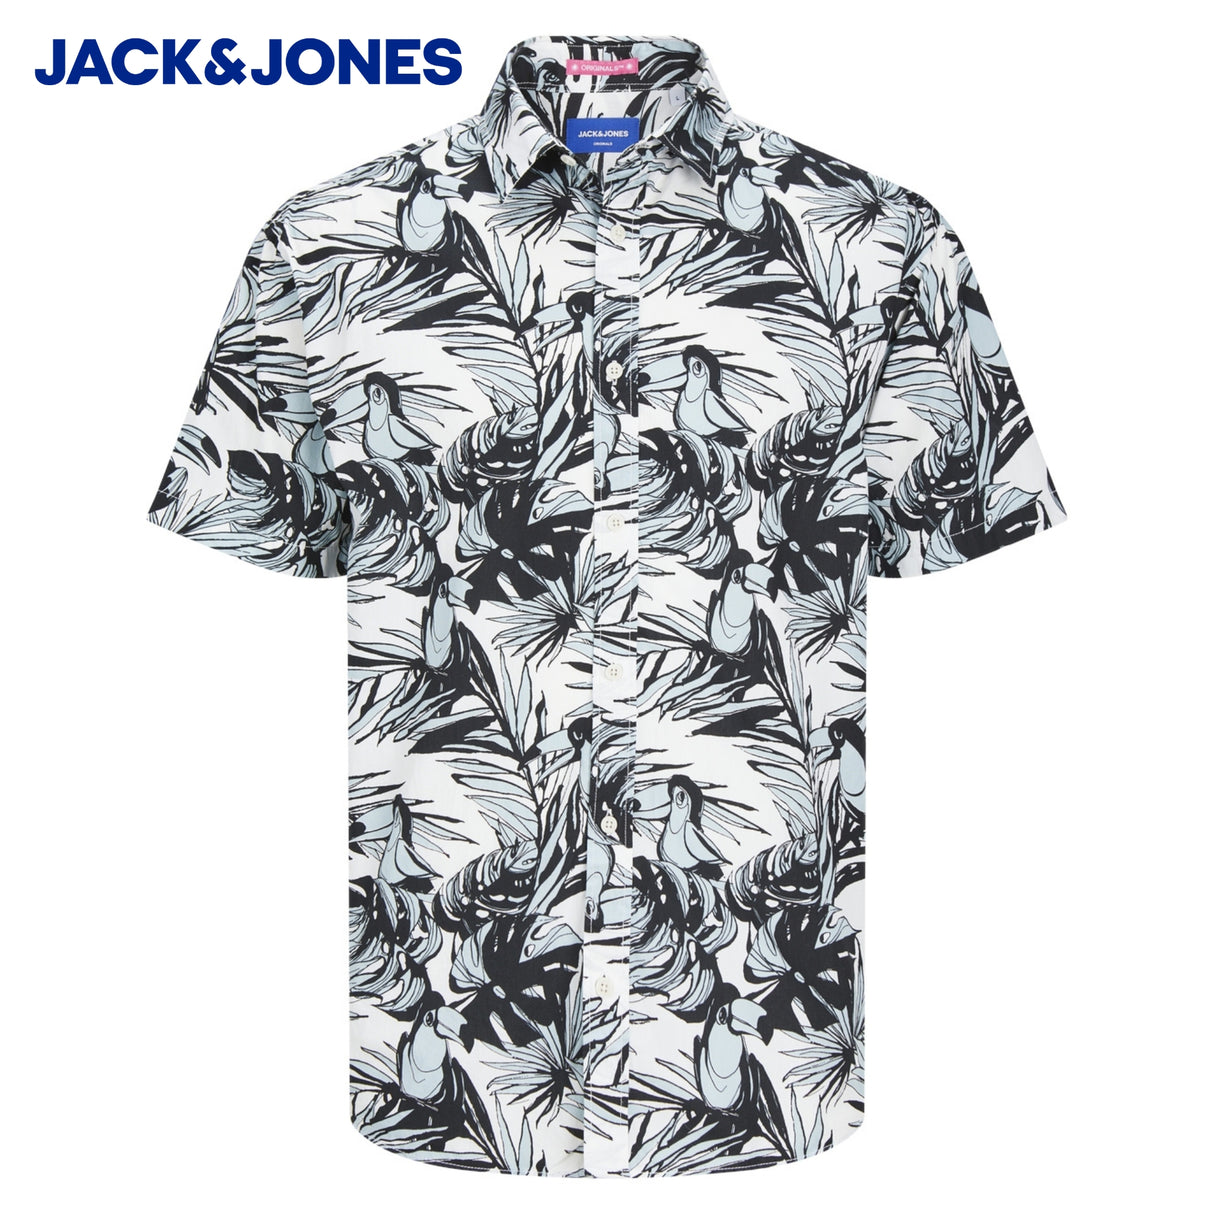 Jack & Jones Aruba Cloud Dancer Shirt Navy